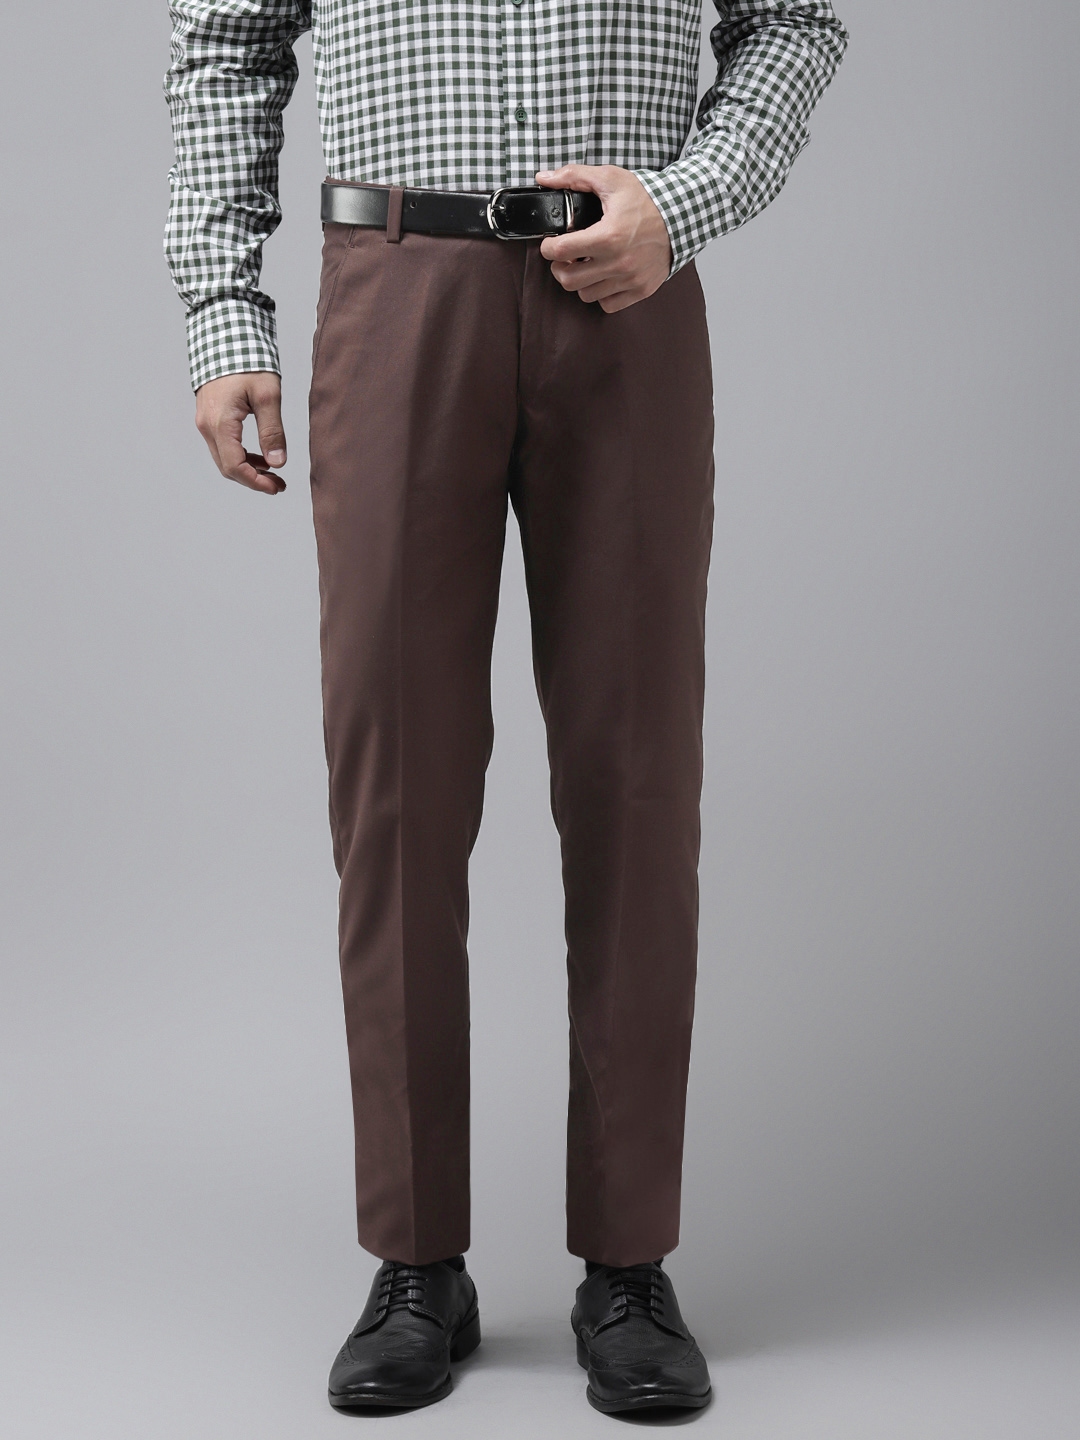 Buy Dark Brown Formal and casual Everyday Pant online for men